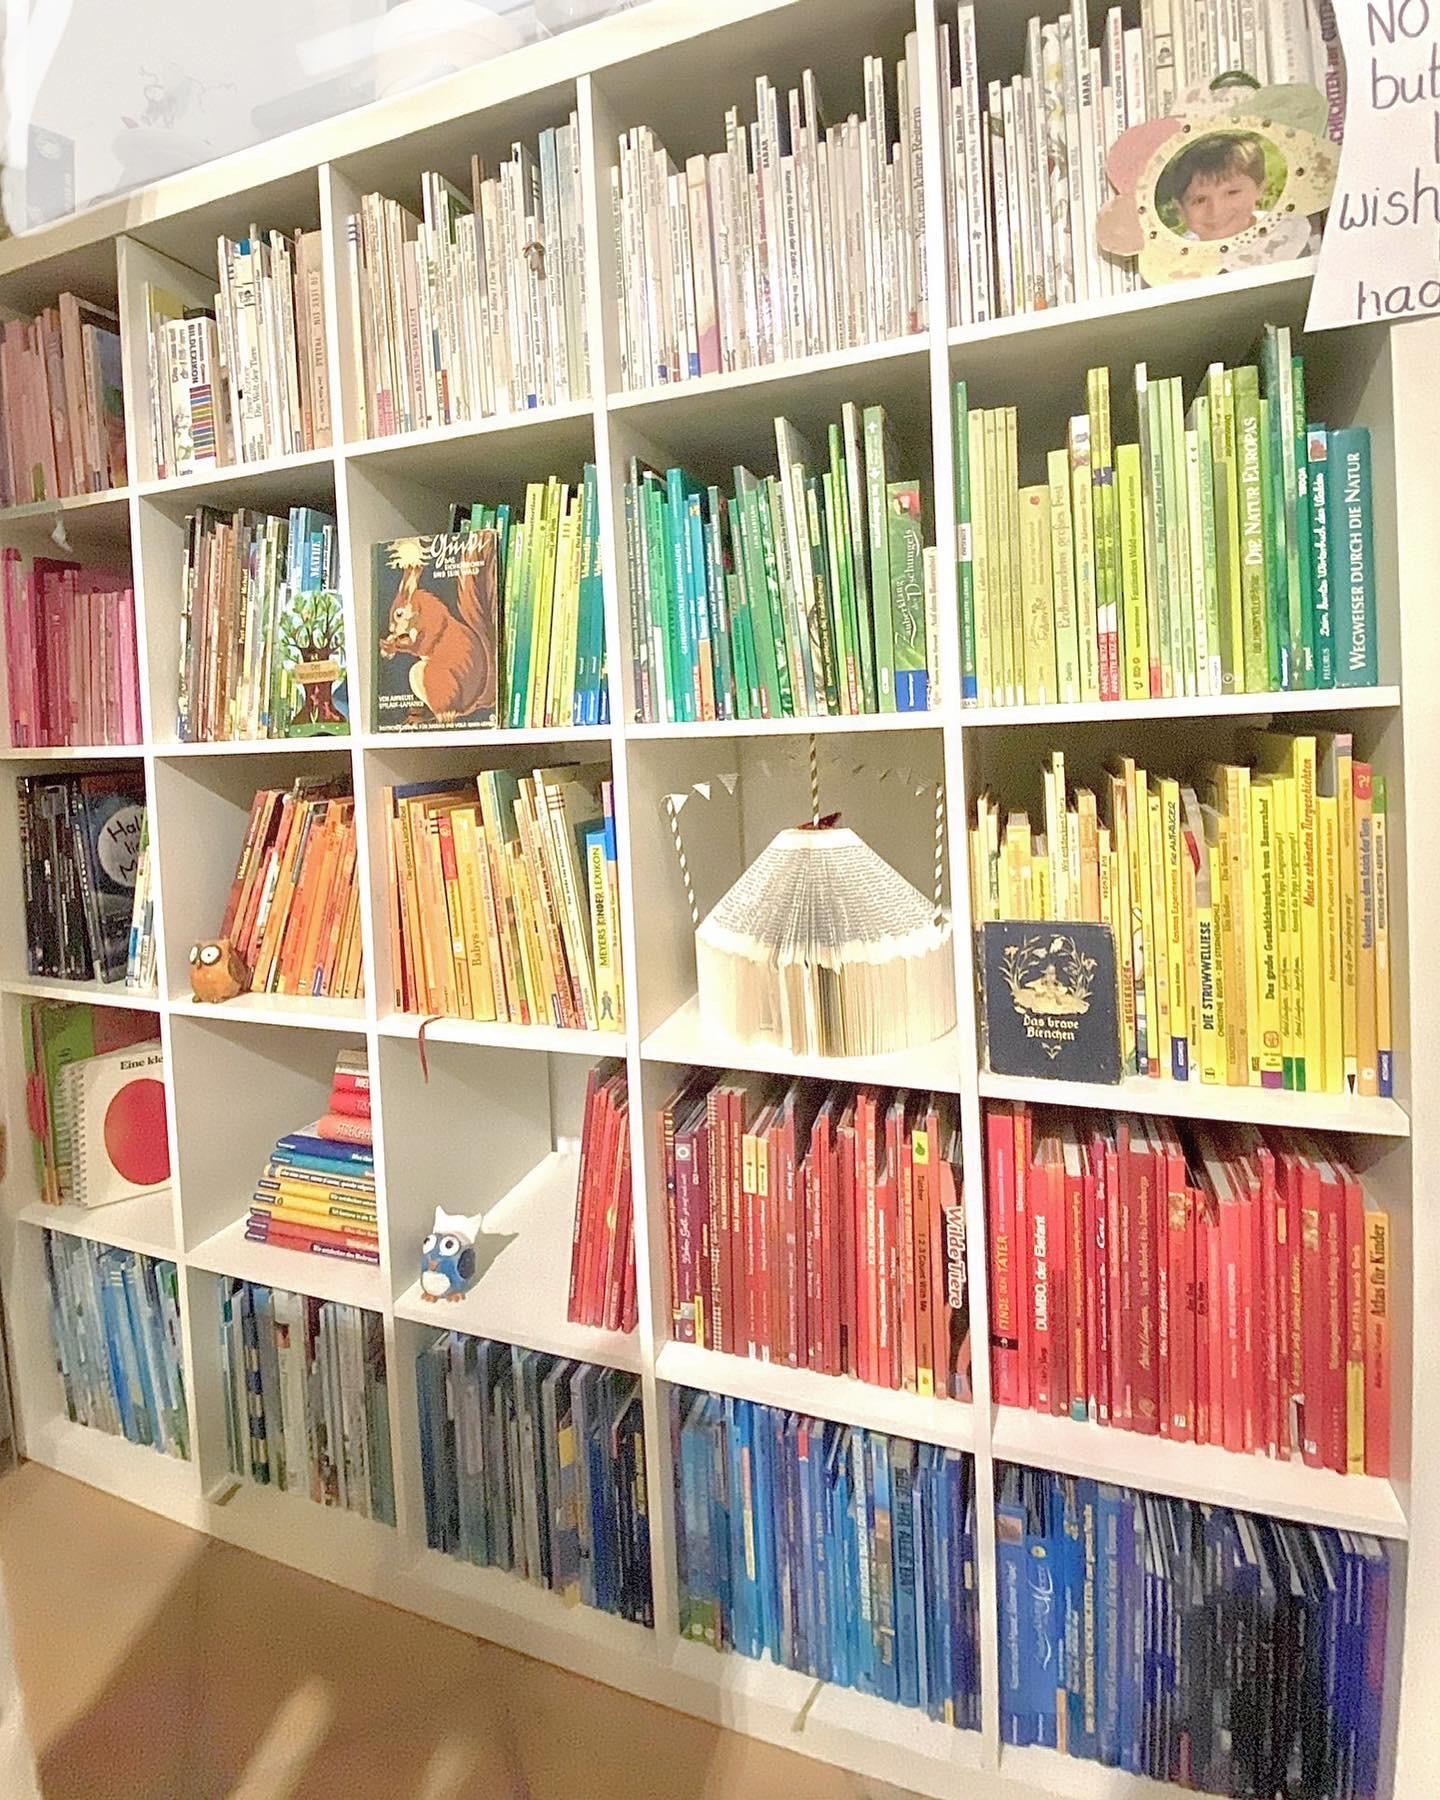 #bookshelf full with #kidsbooks #kidsroom #kinderbücher #kinderbuchliebe #kidsbooklove #bücherregal #rainbow #shelfie